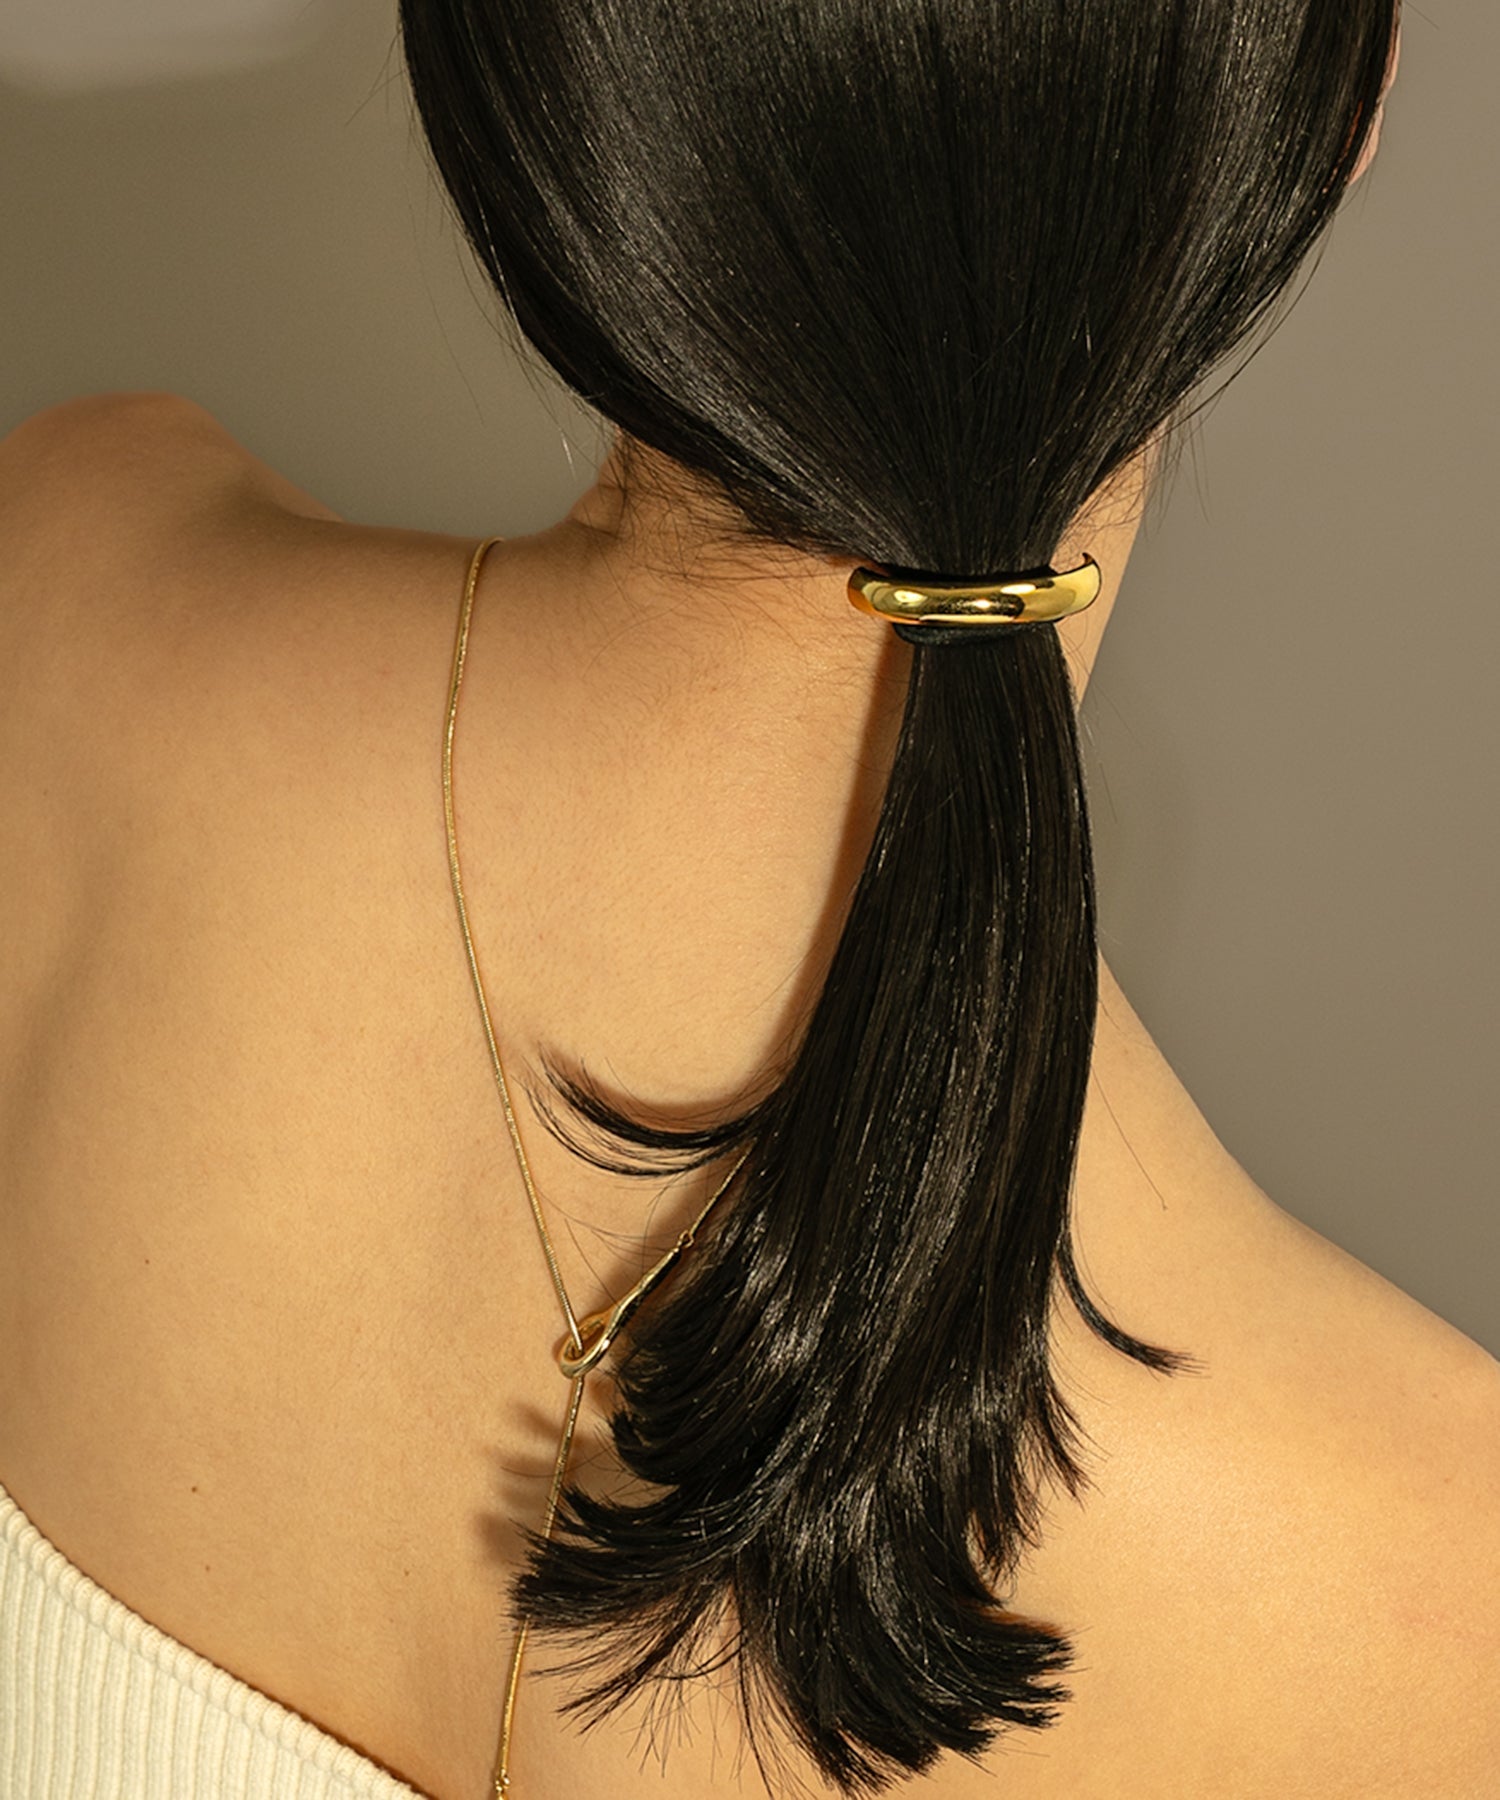 Hair accessory